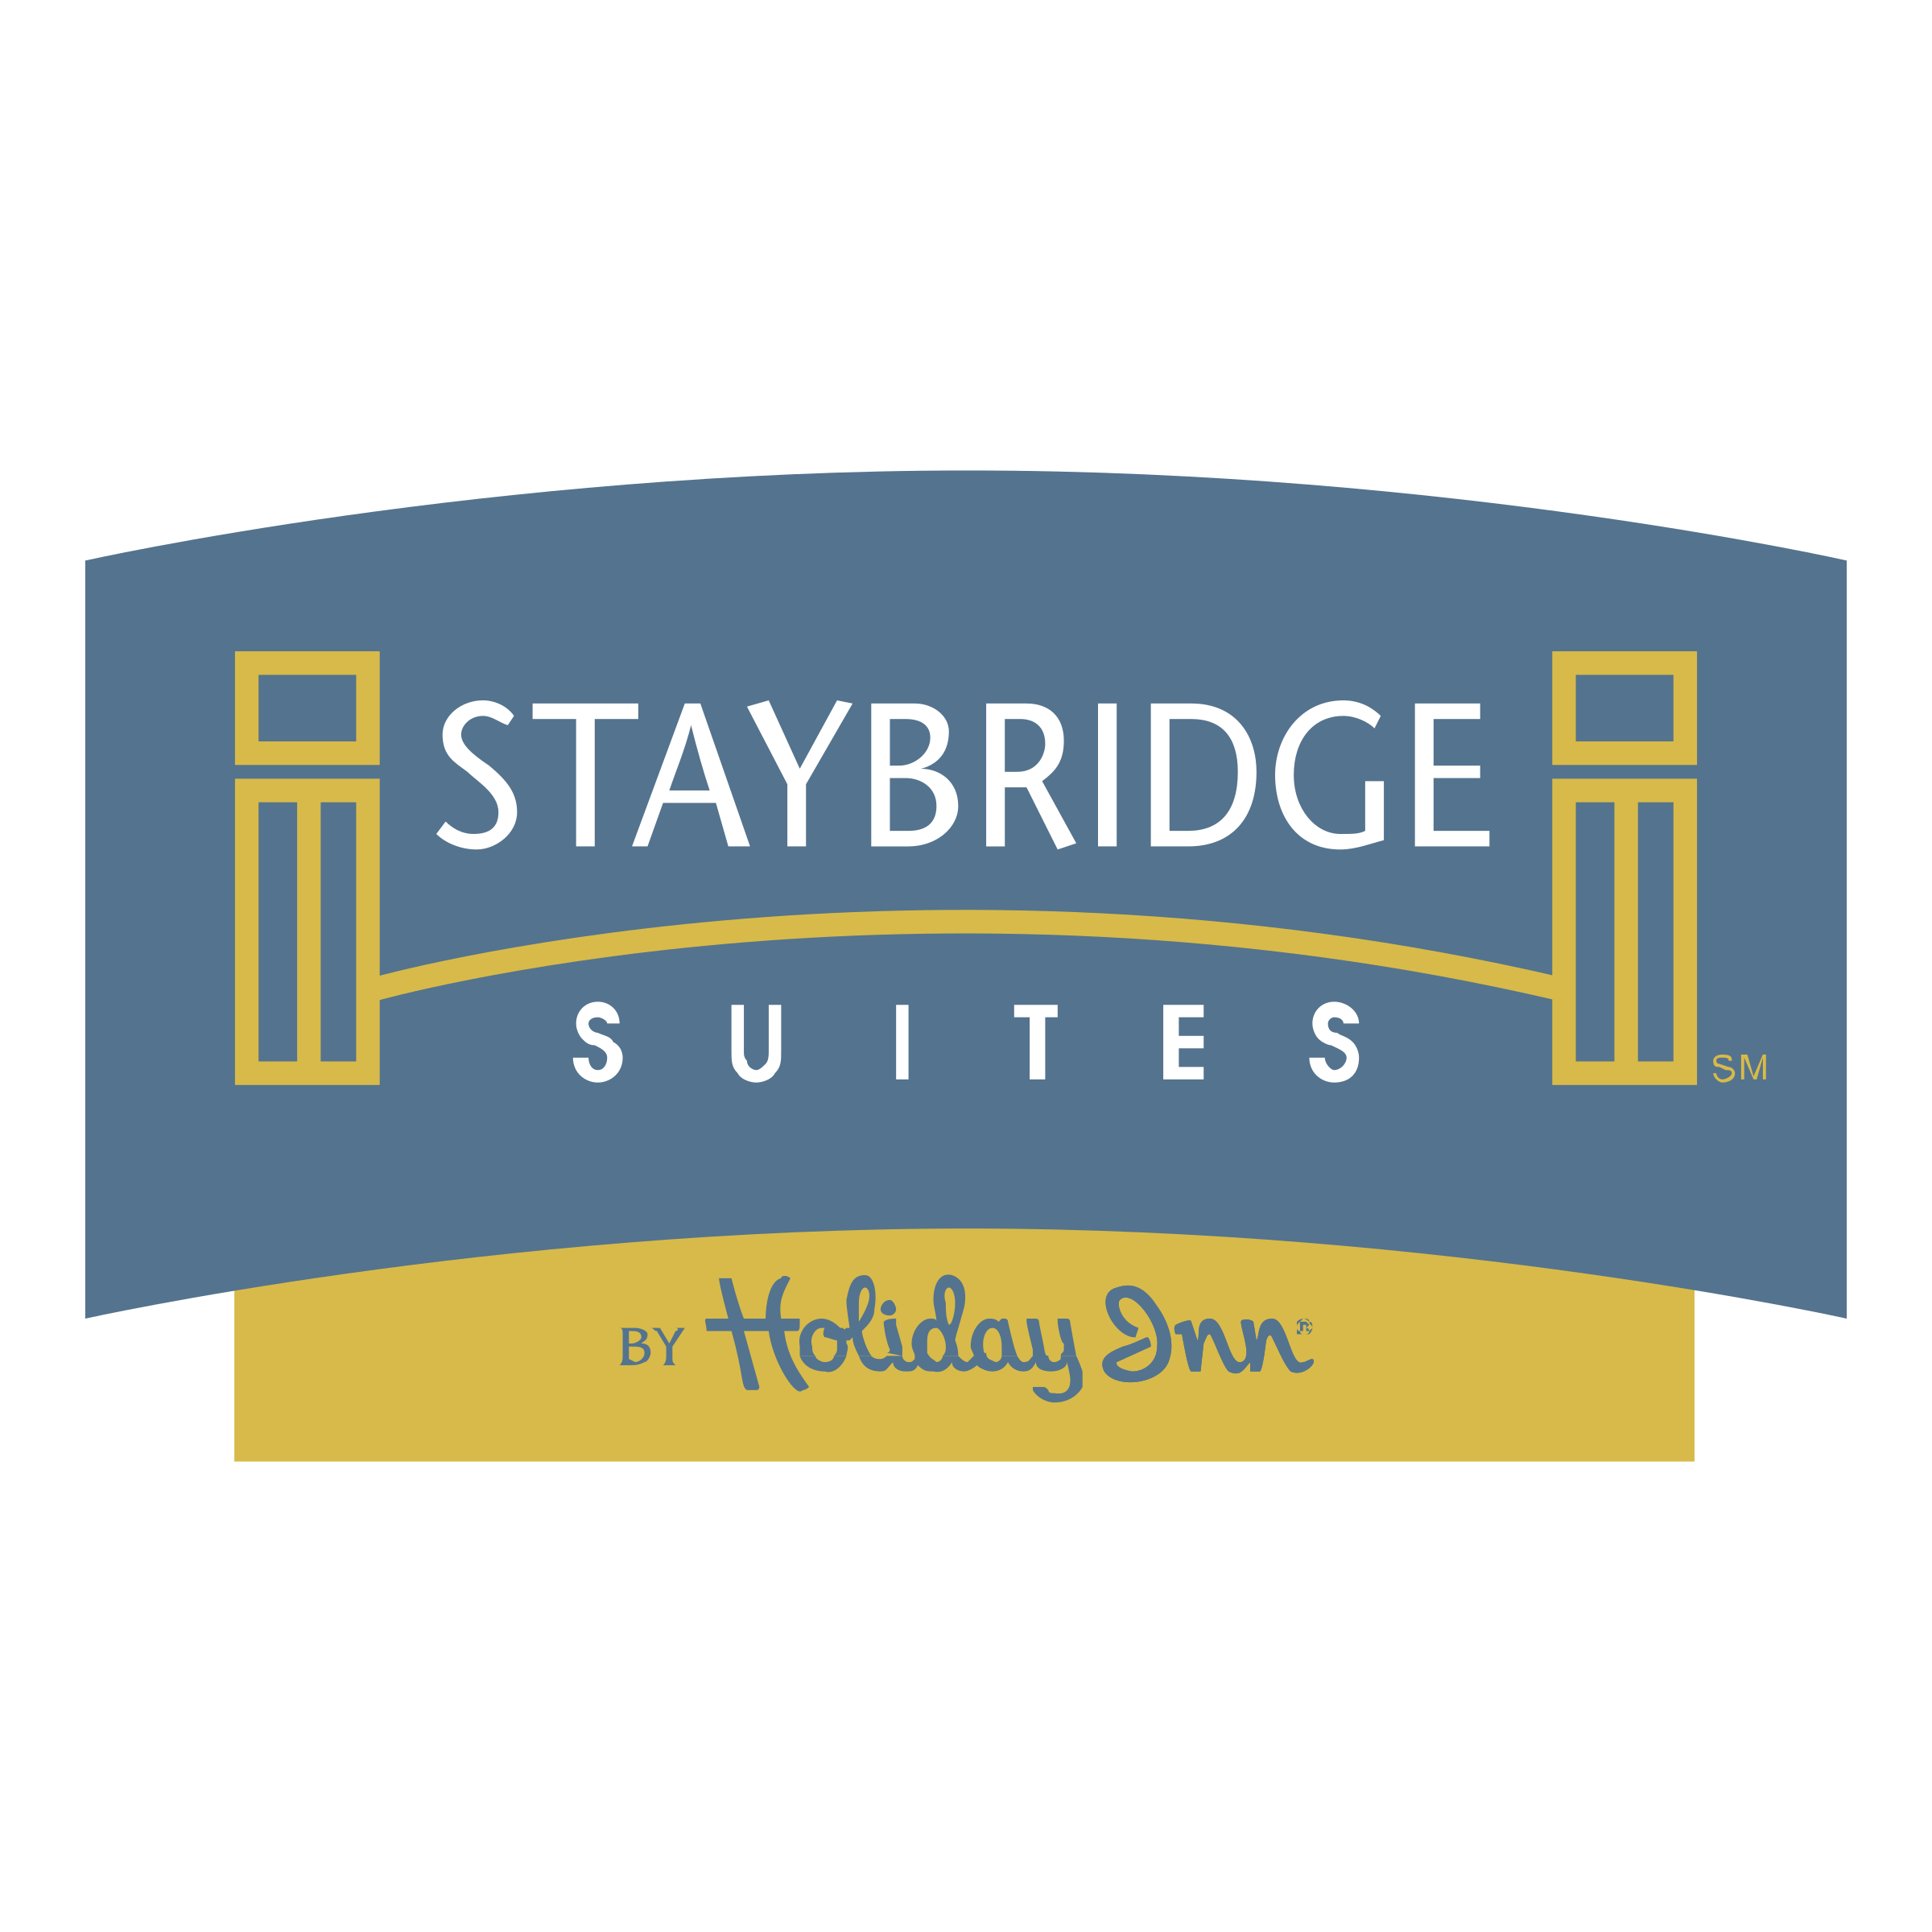 Staybridge Logo - Staybridge Suites Logo PNG Transparent & SVG Vector - Freebie Supply